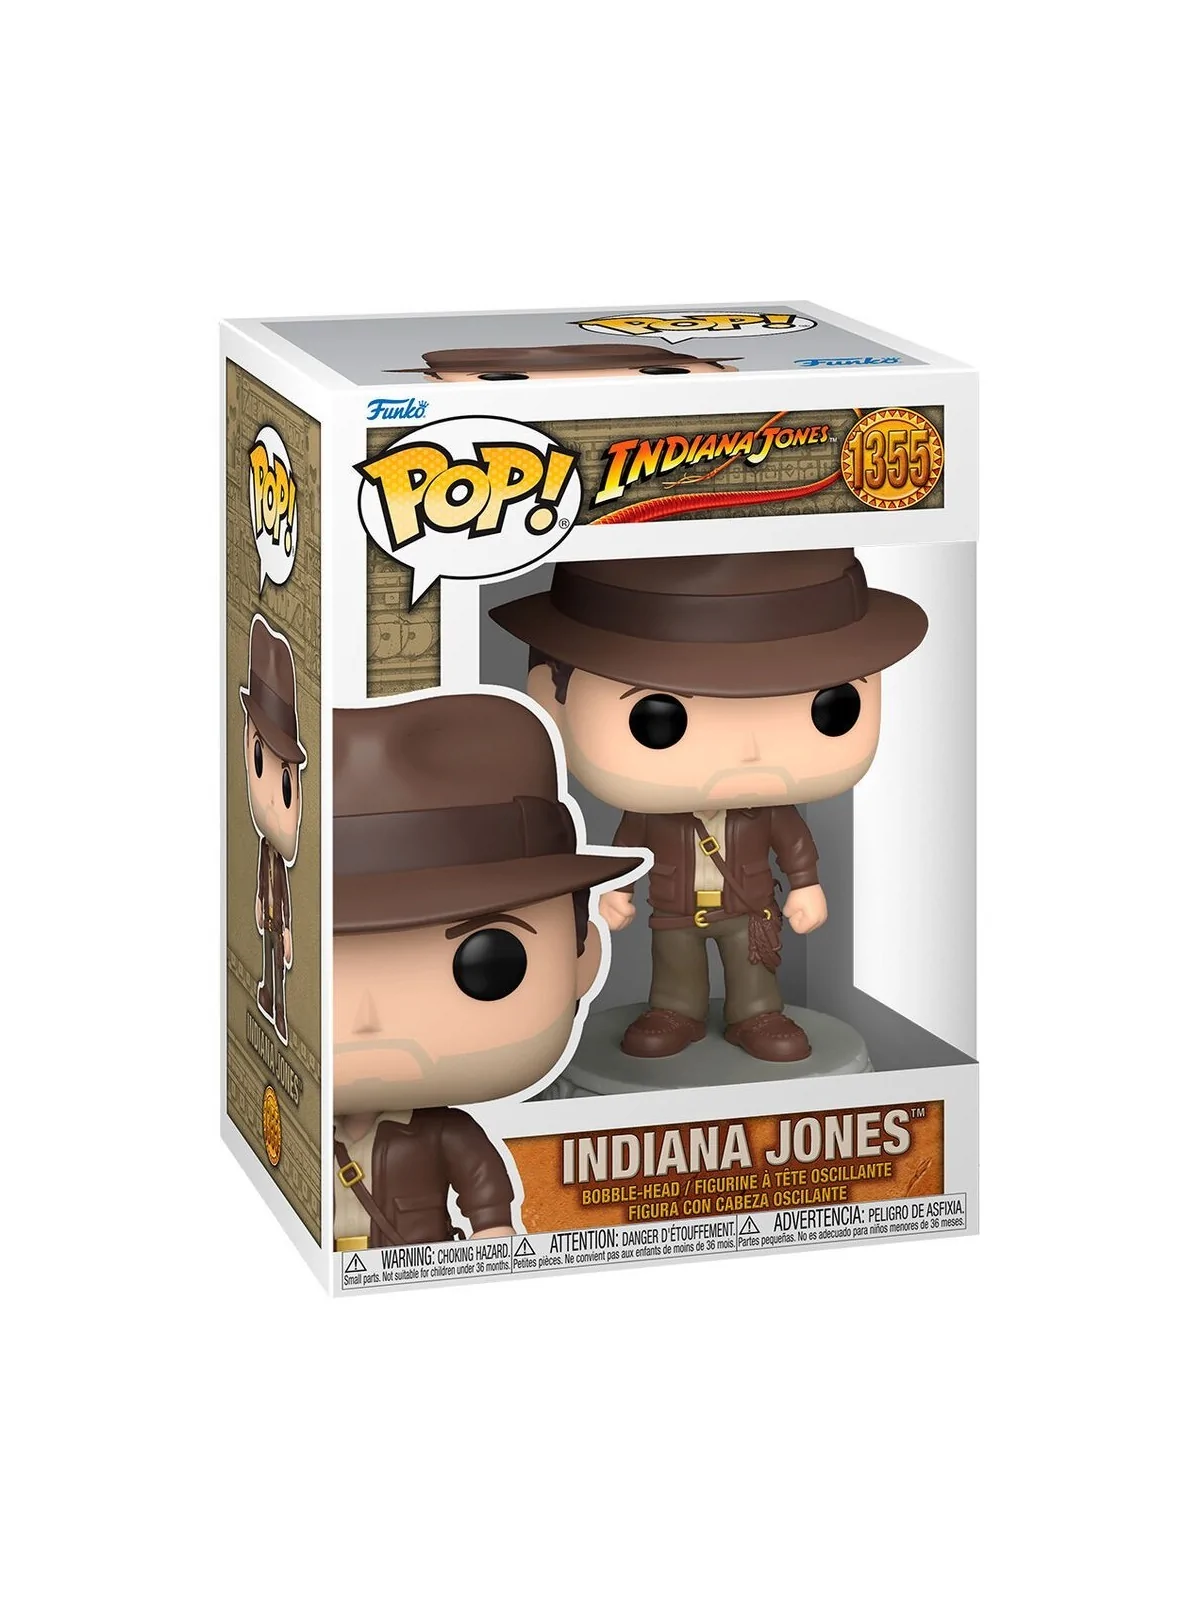 Comprar Funko POP! Indiana Jones: Indiana Jones (1355)) barato al mejo